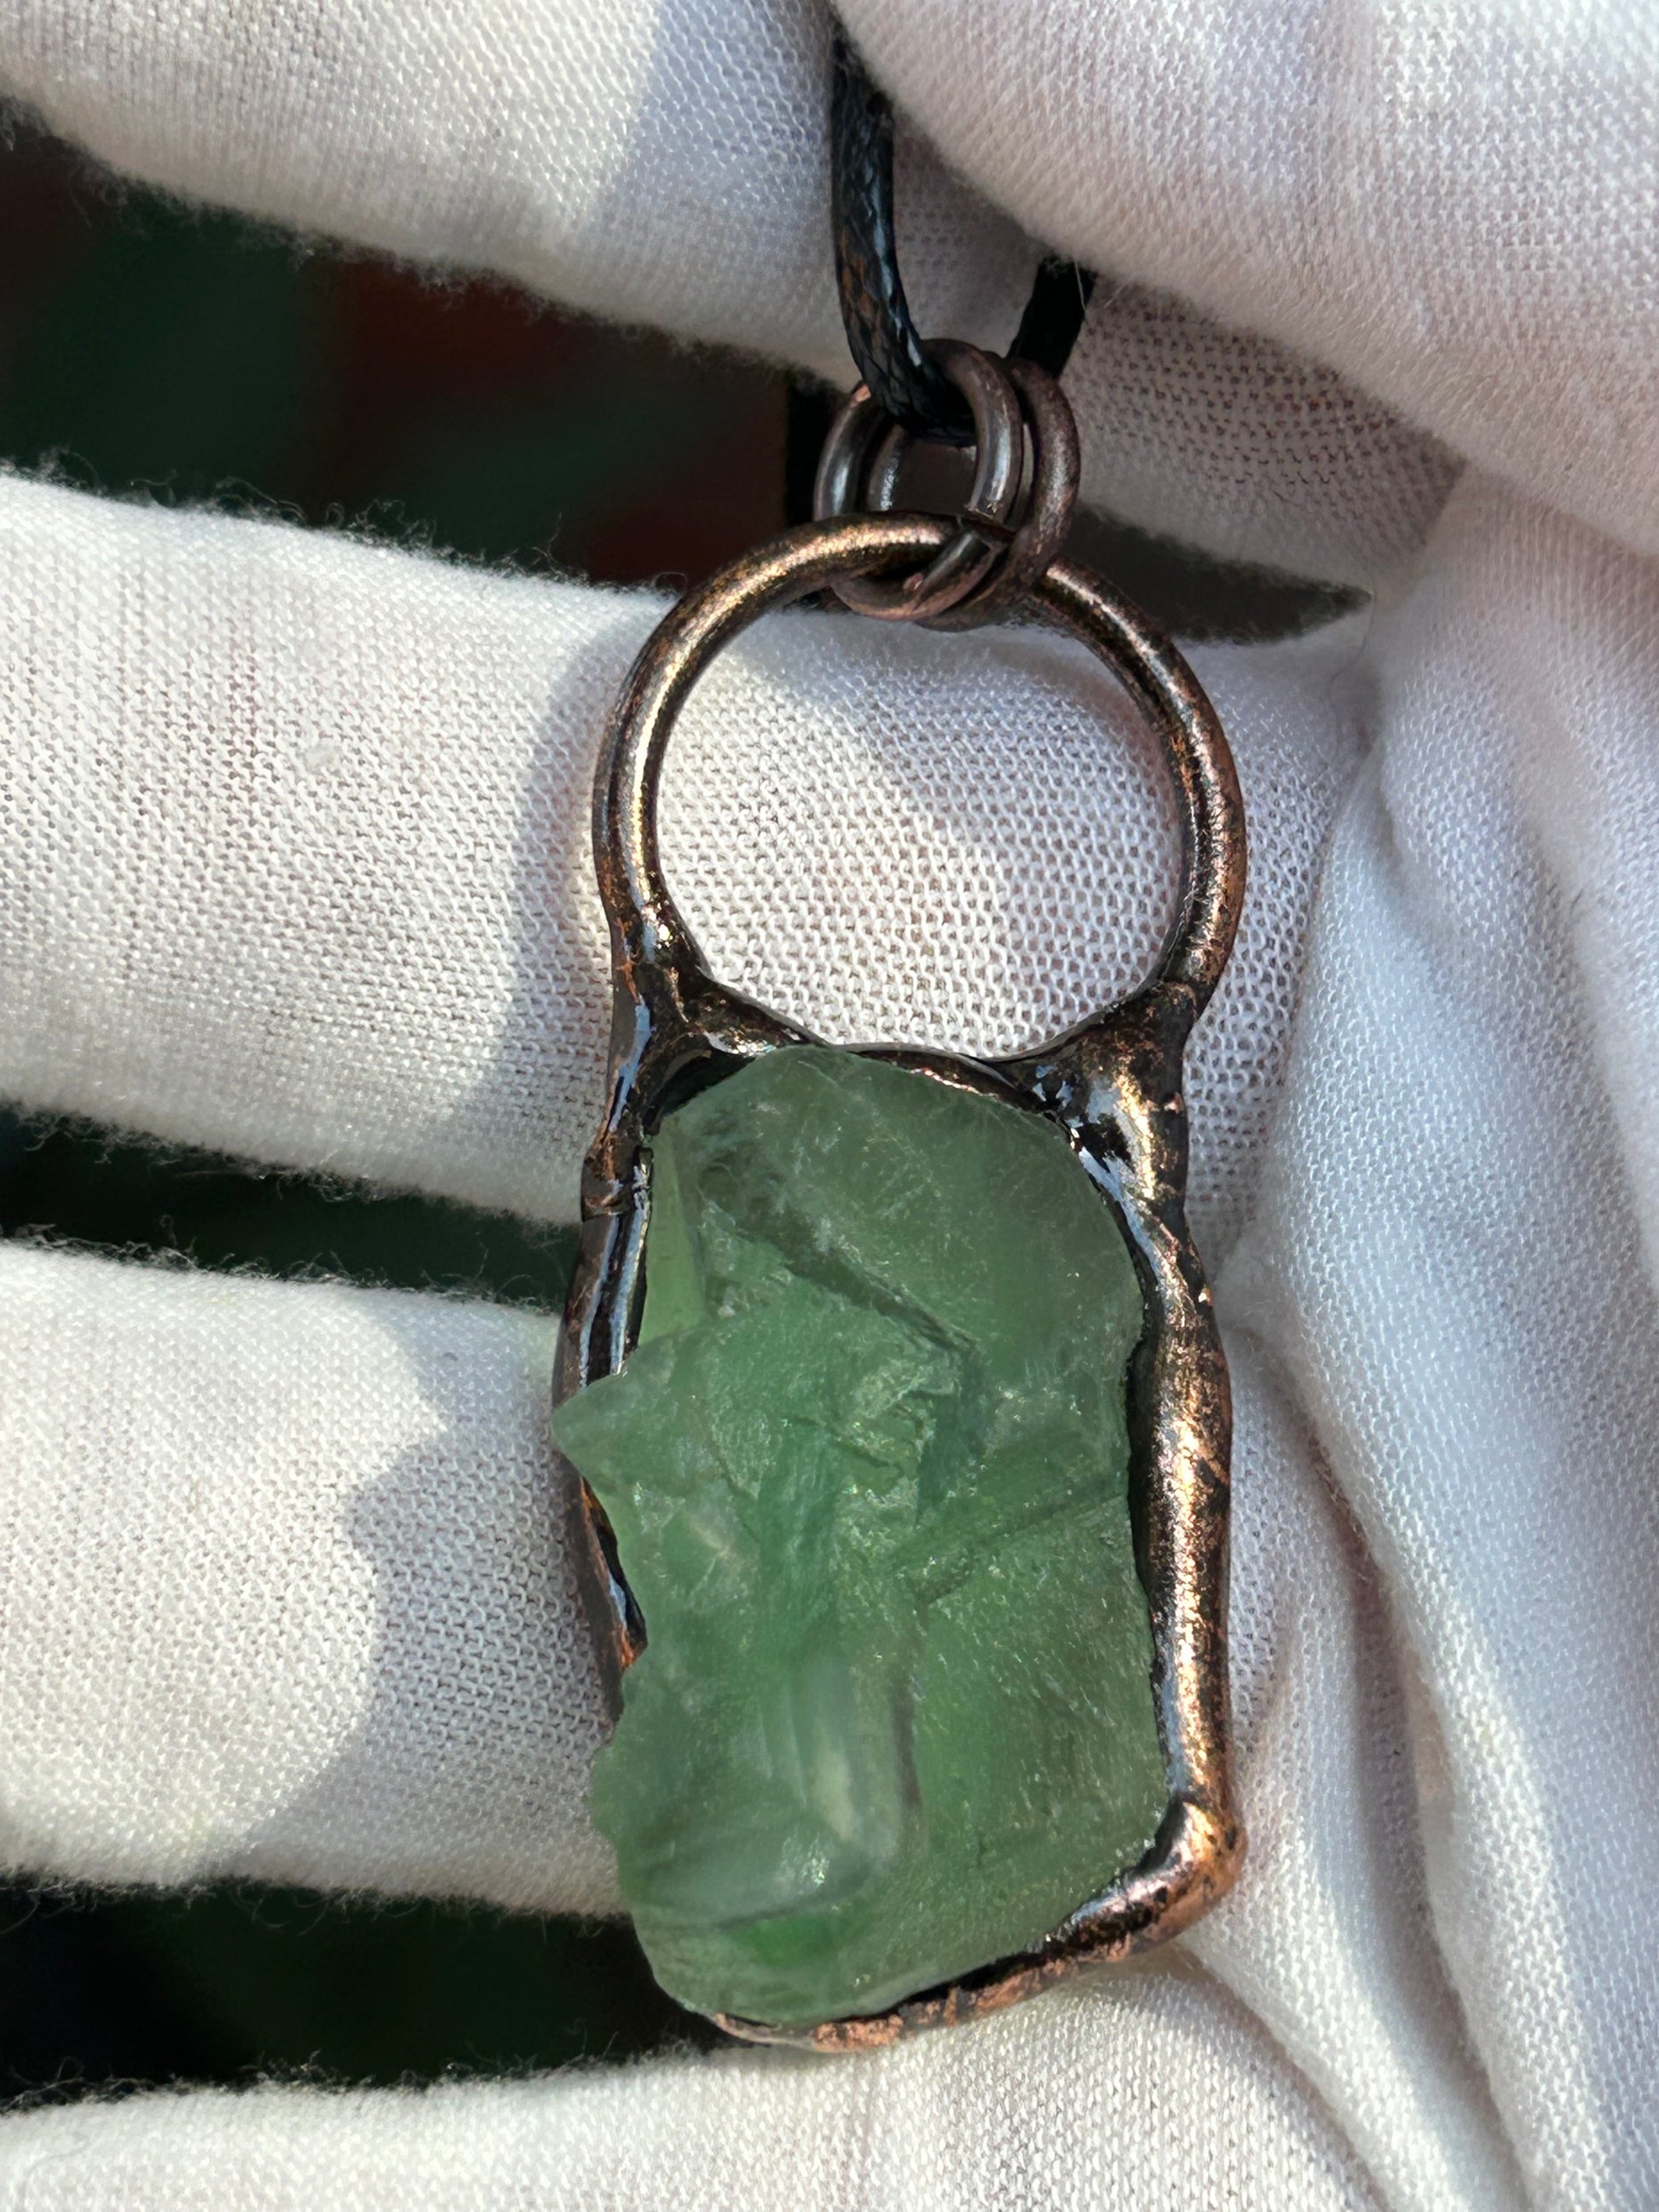 raw green flourite pendant in antique rustic copper setting